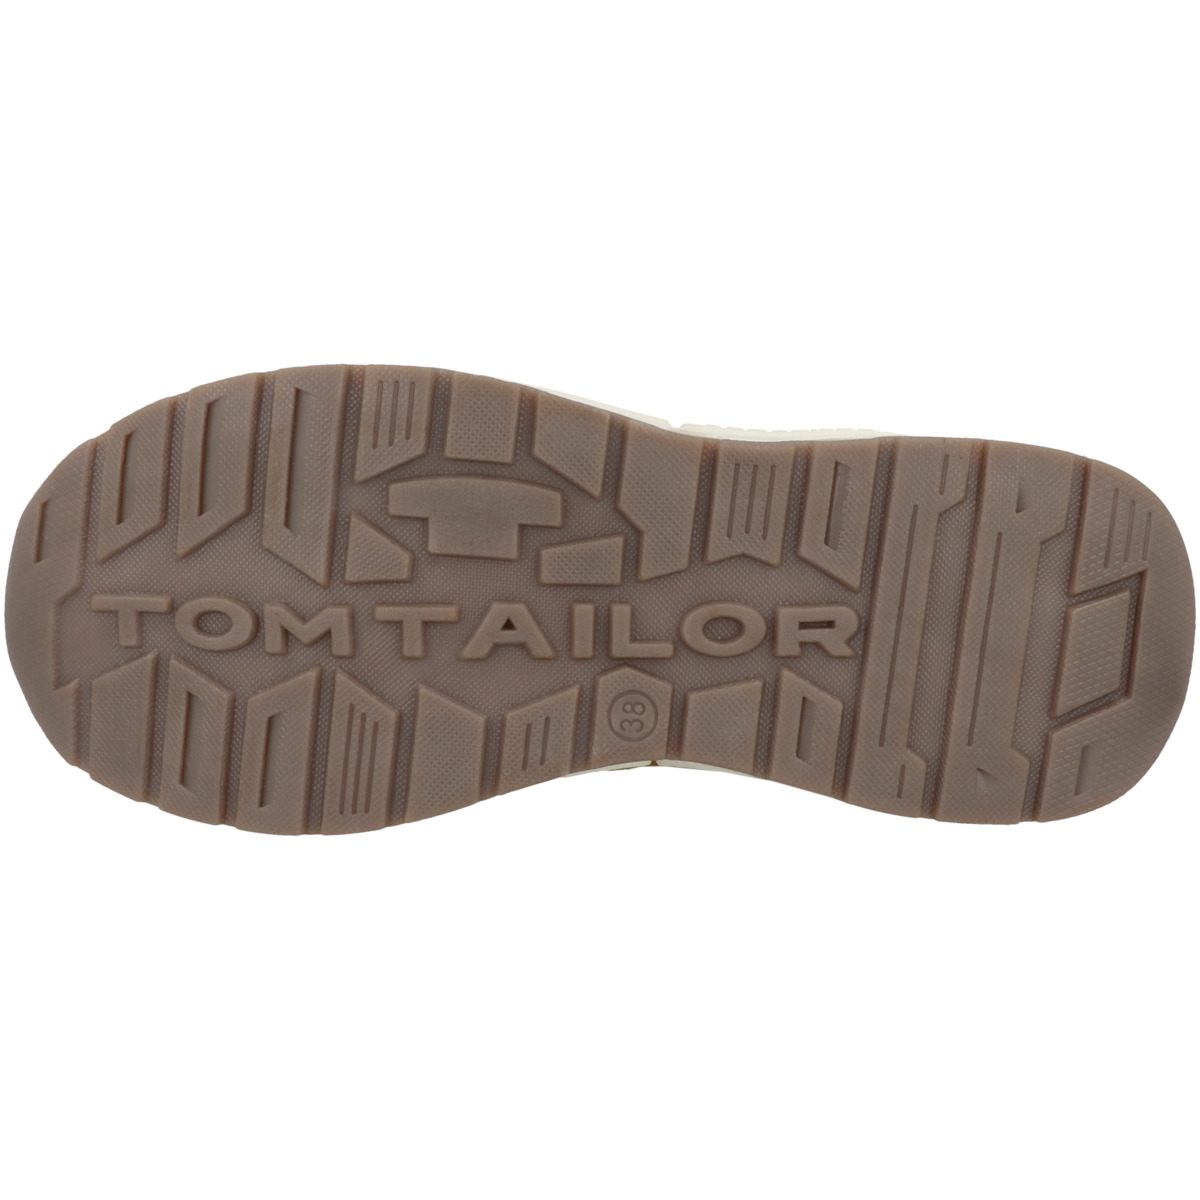 Tom Tailor 4271801 Boots braun